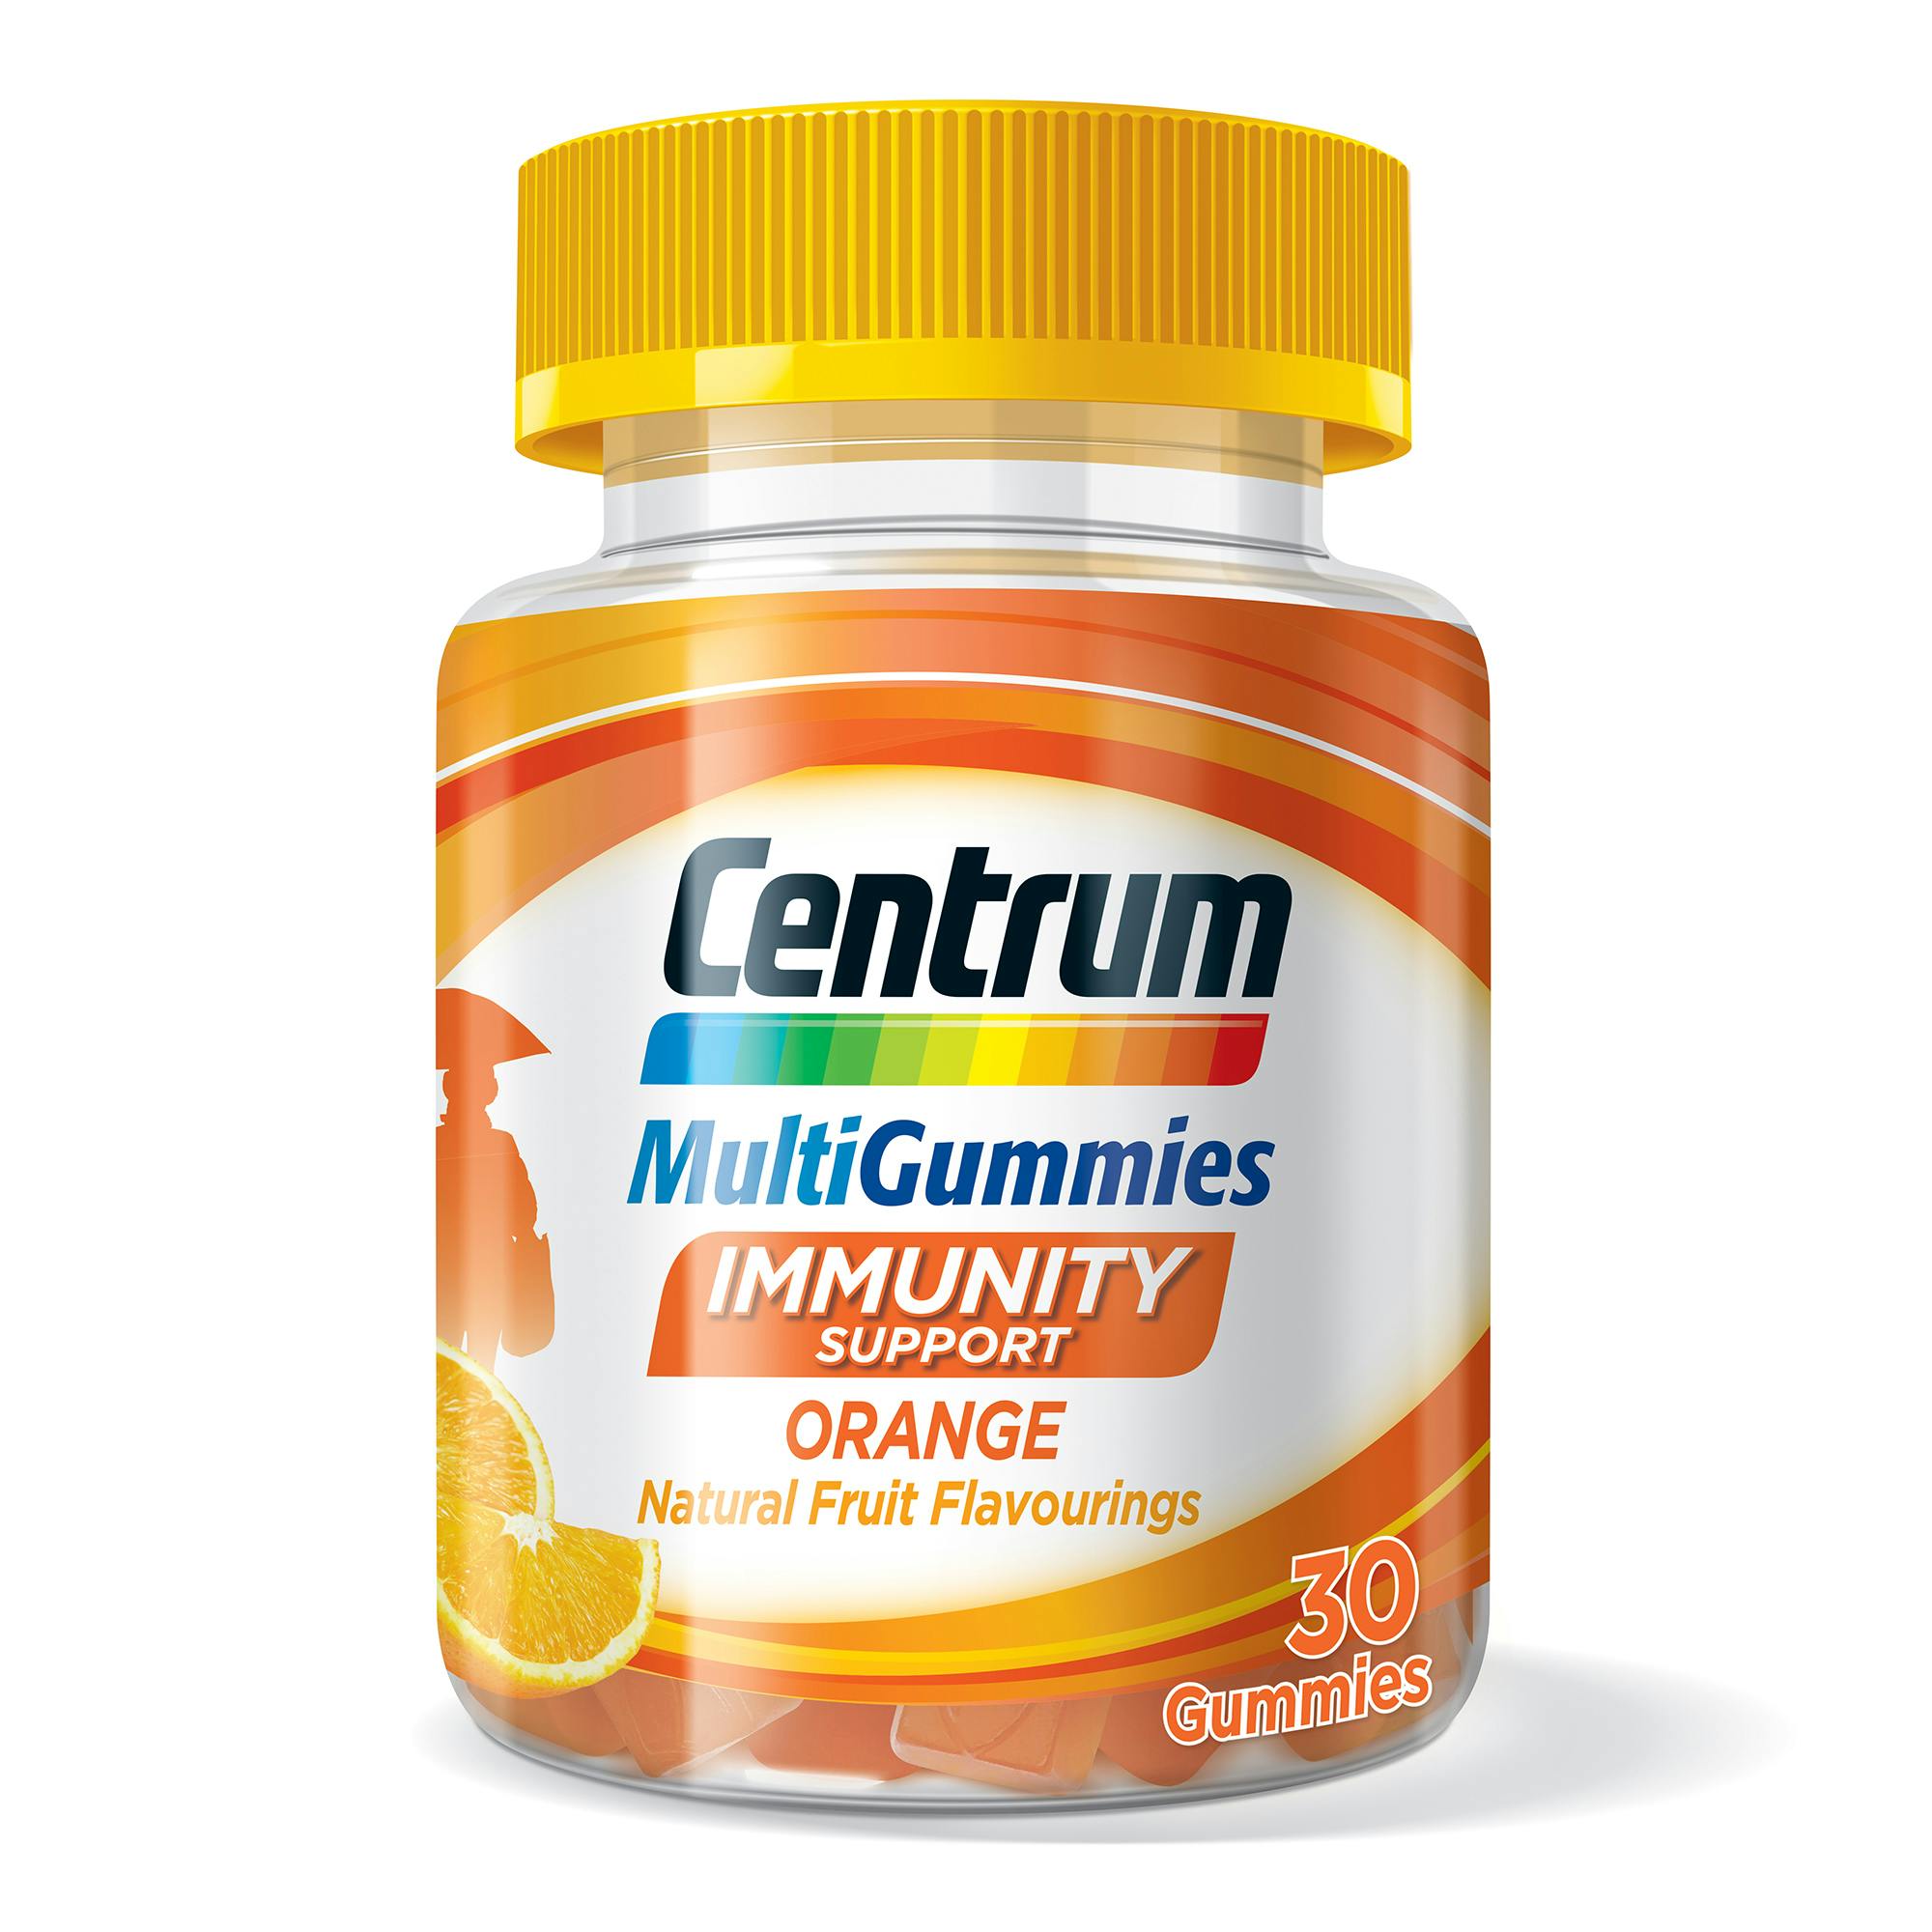 Box of Centrum MultiGummies Immunity Support